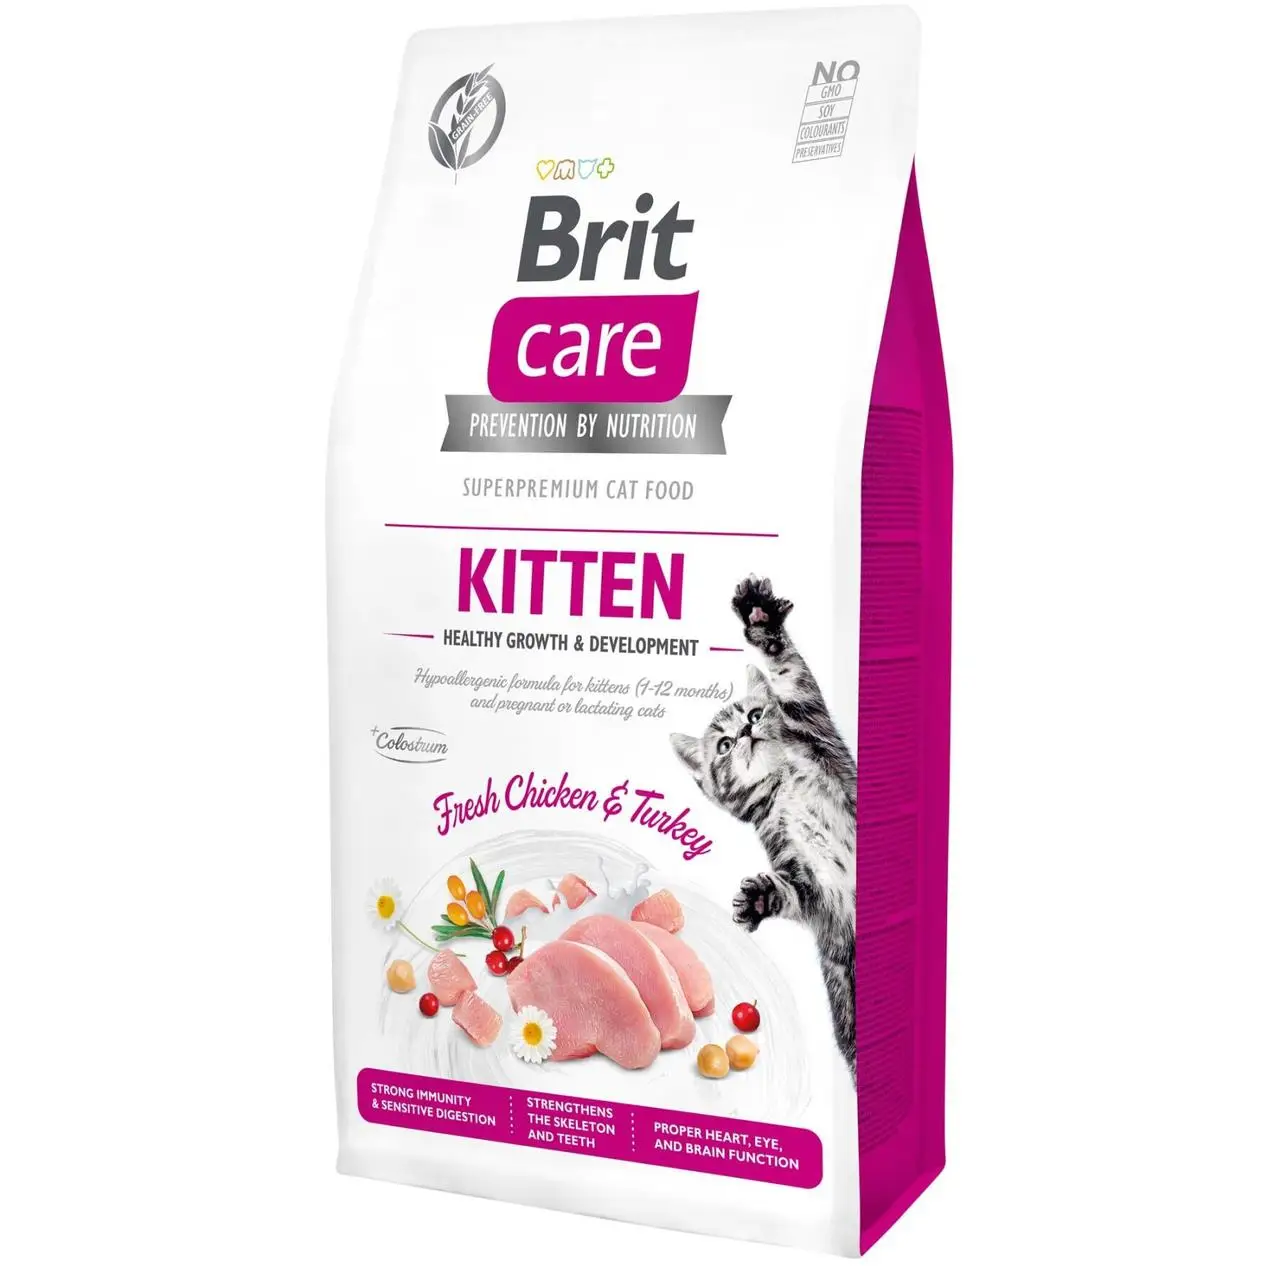 Brit Care Cat GF Kitten HGrowth & Development, 7кг (здорове зростання і розвиток)1